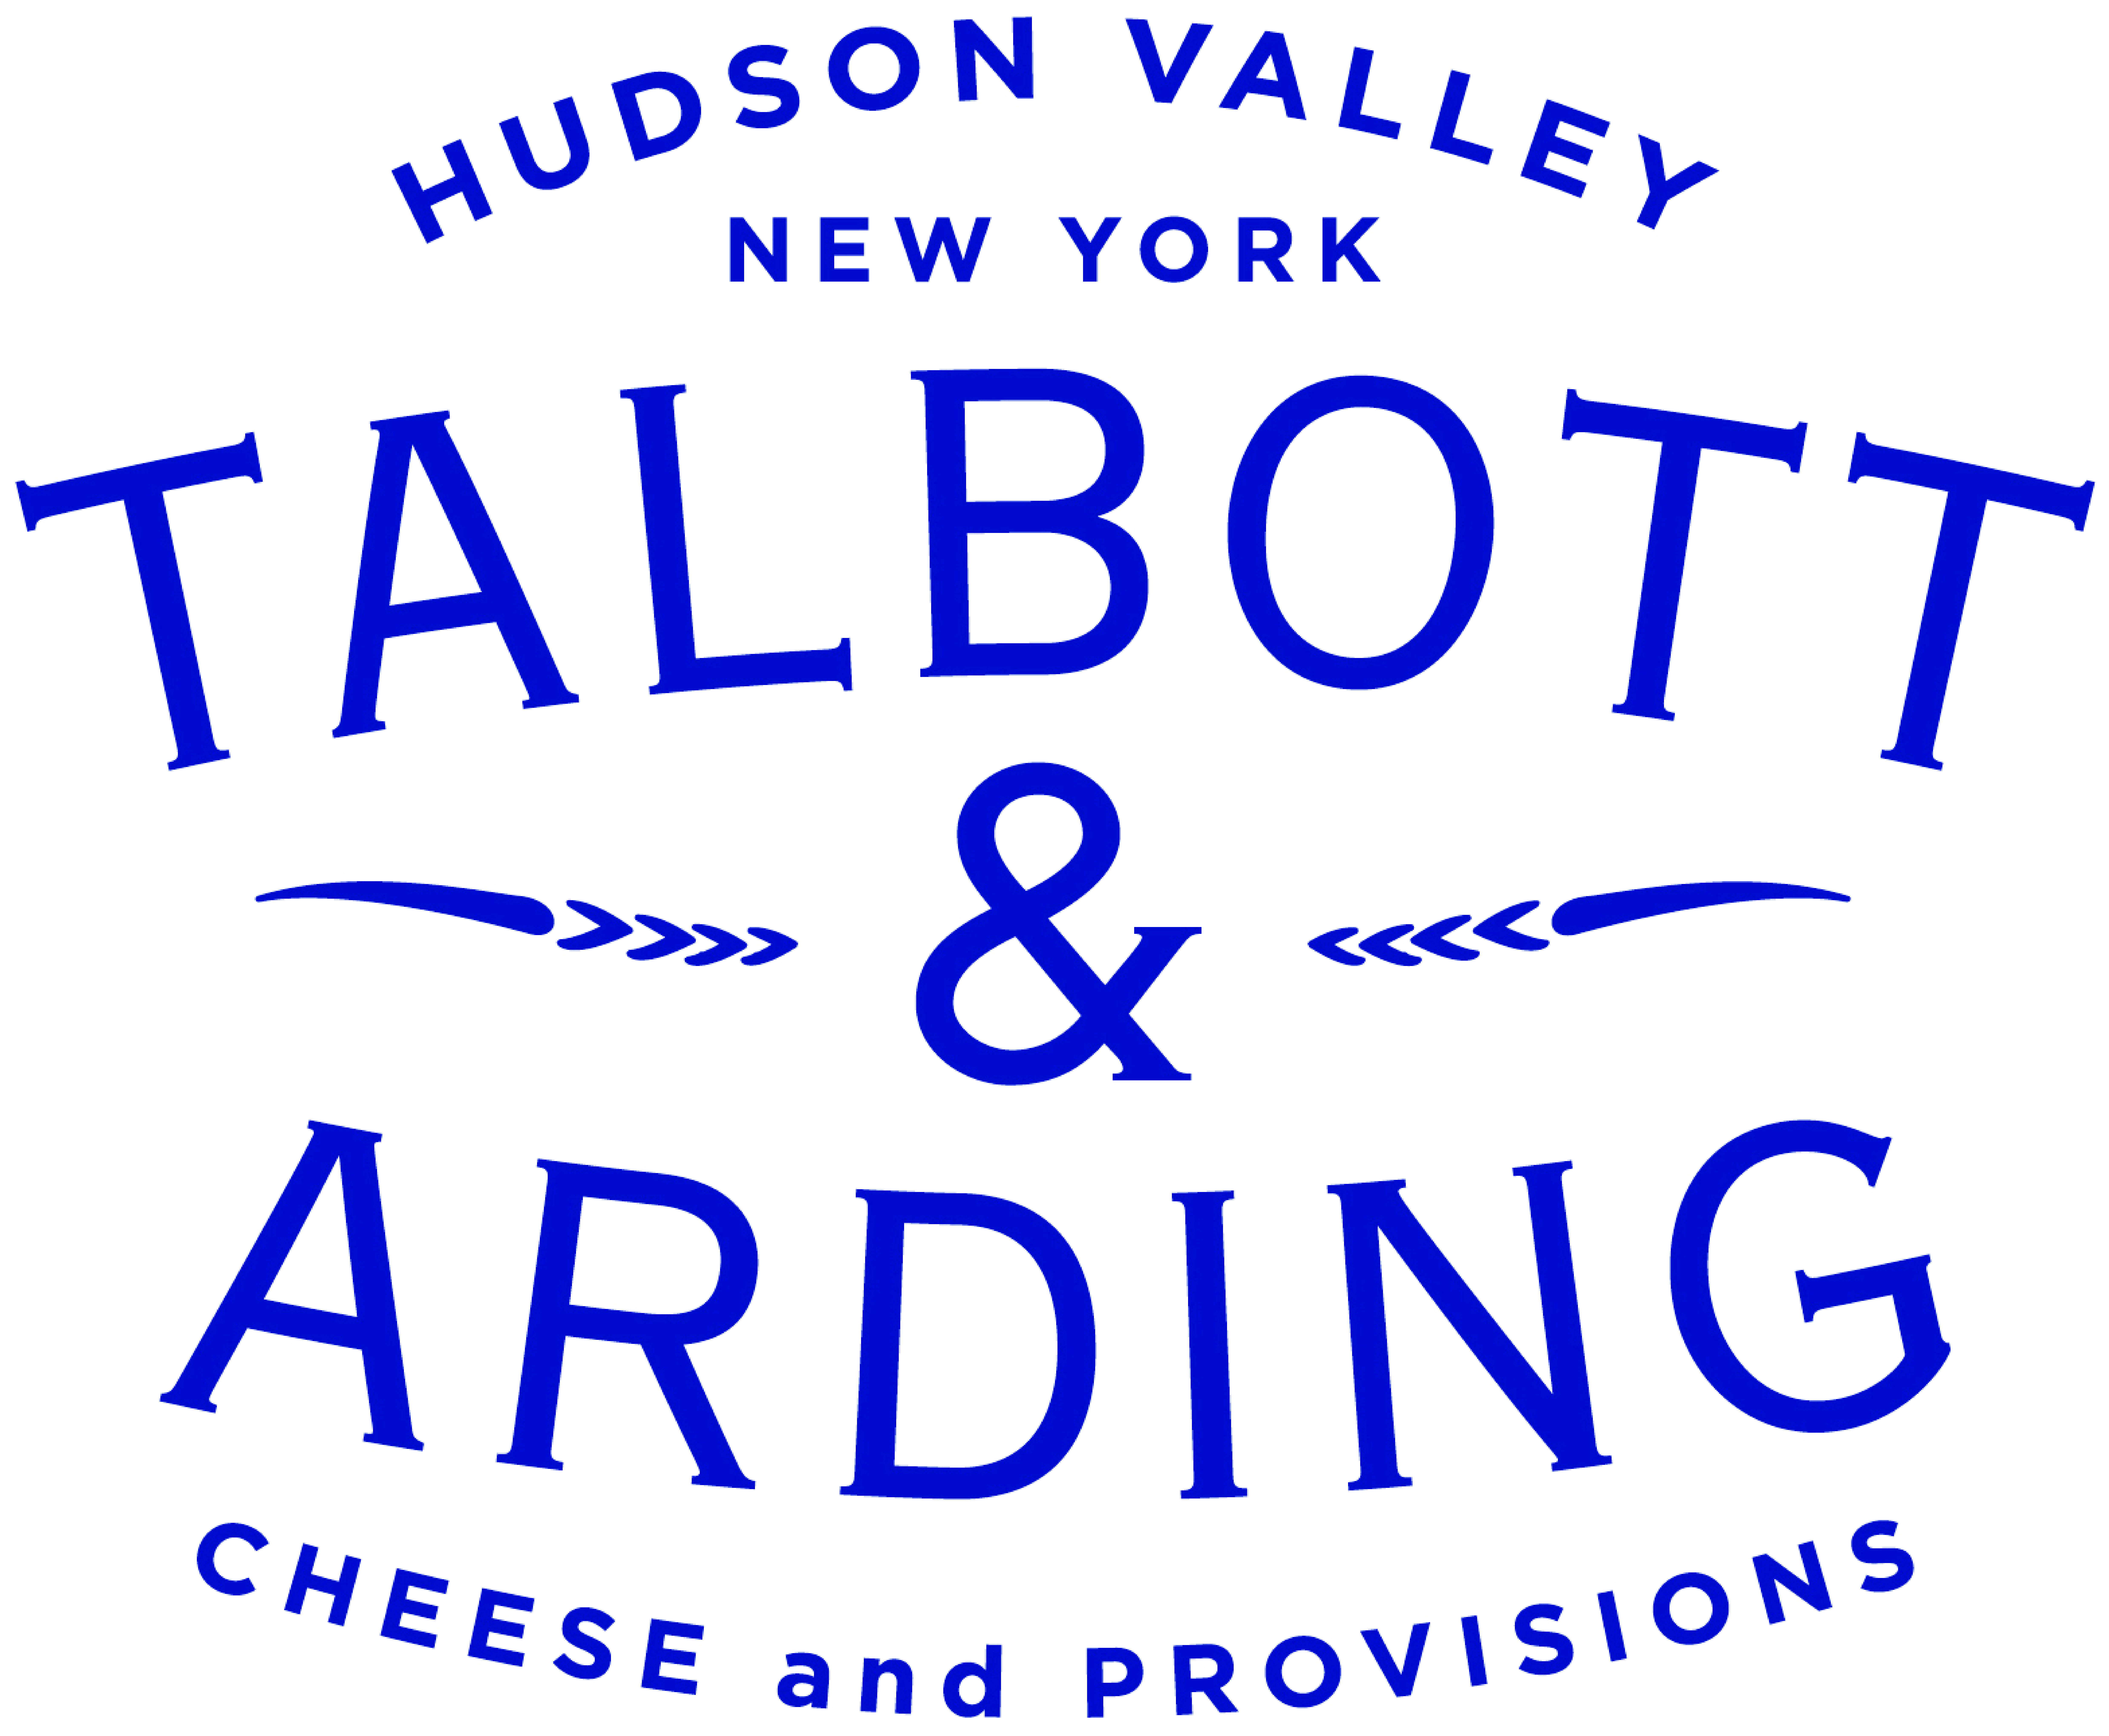 Talbott & Arding